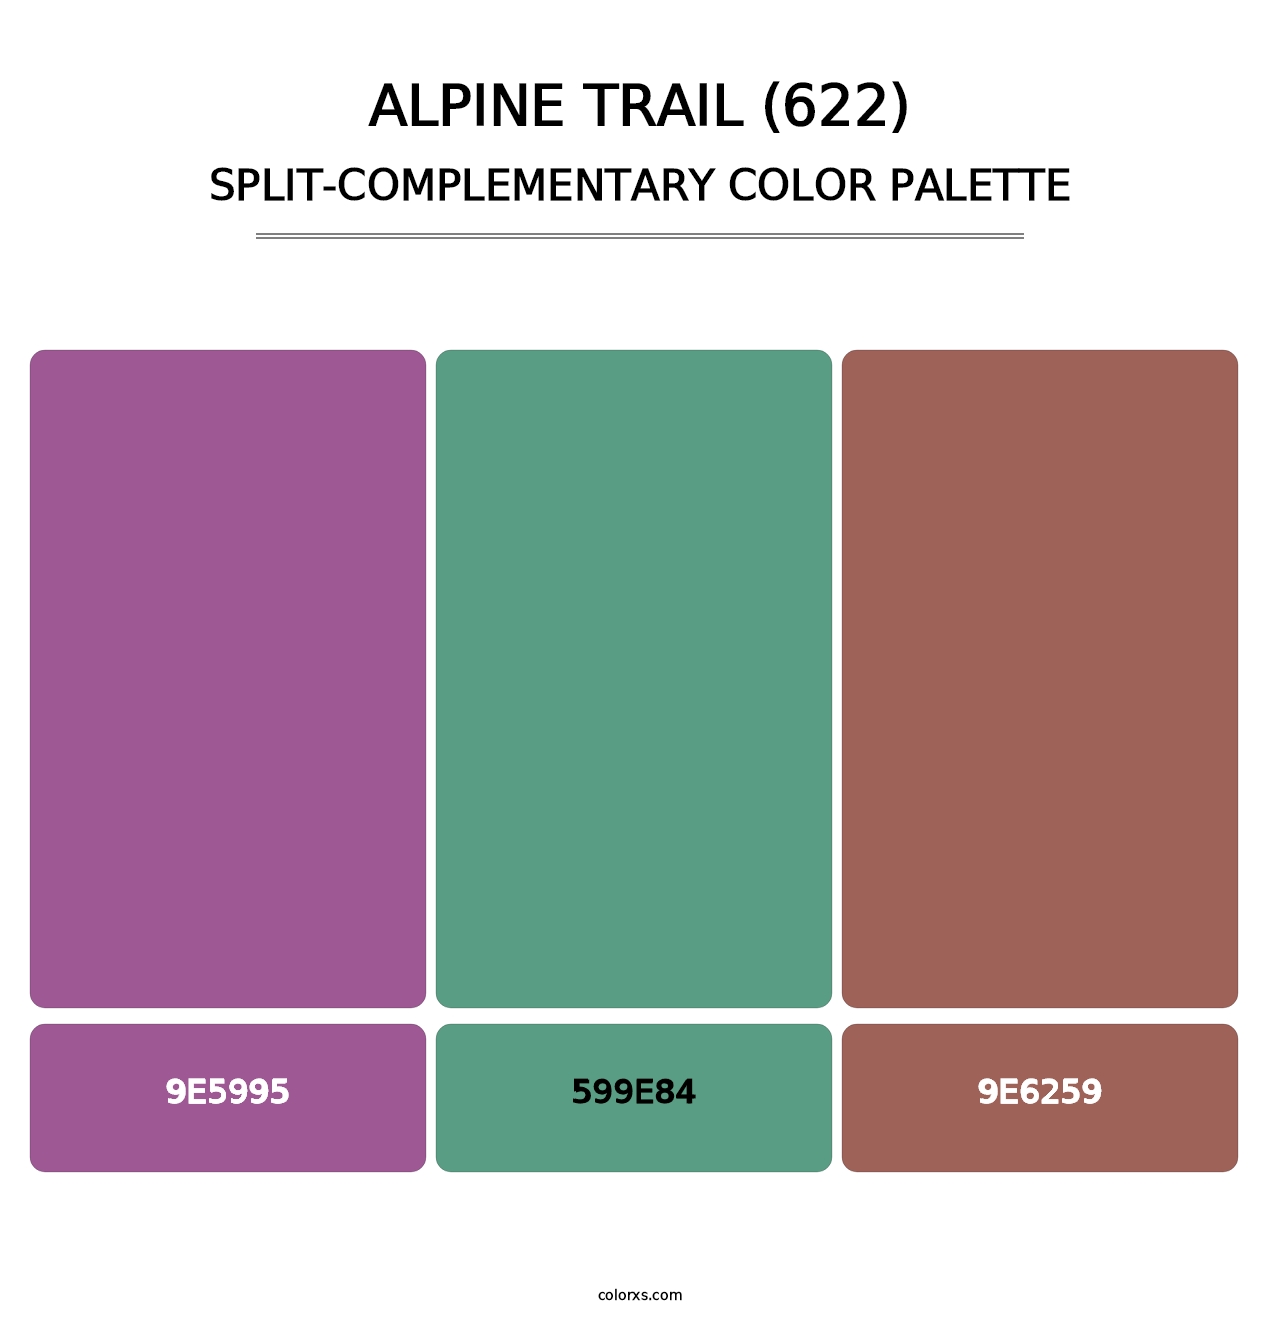 Alpine Trail (622) - Split-Complementary Color Palette